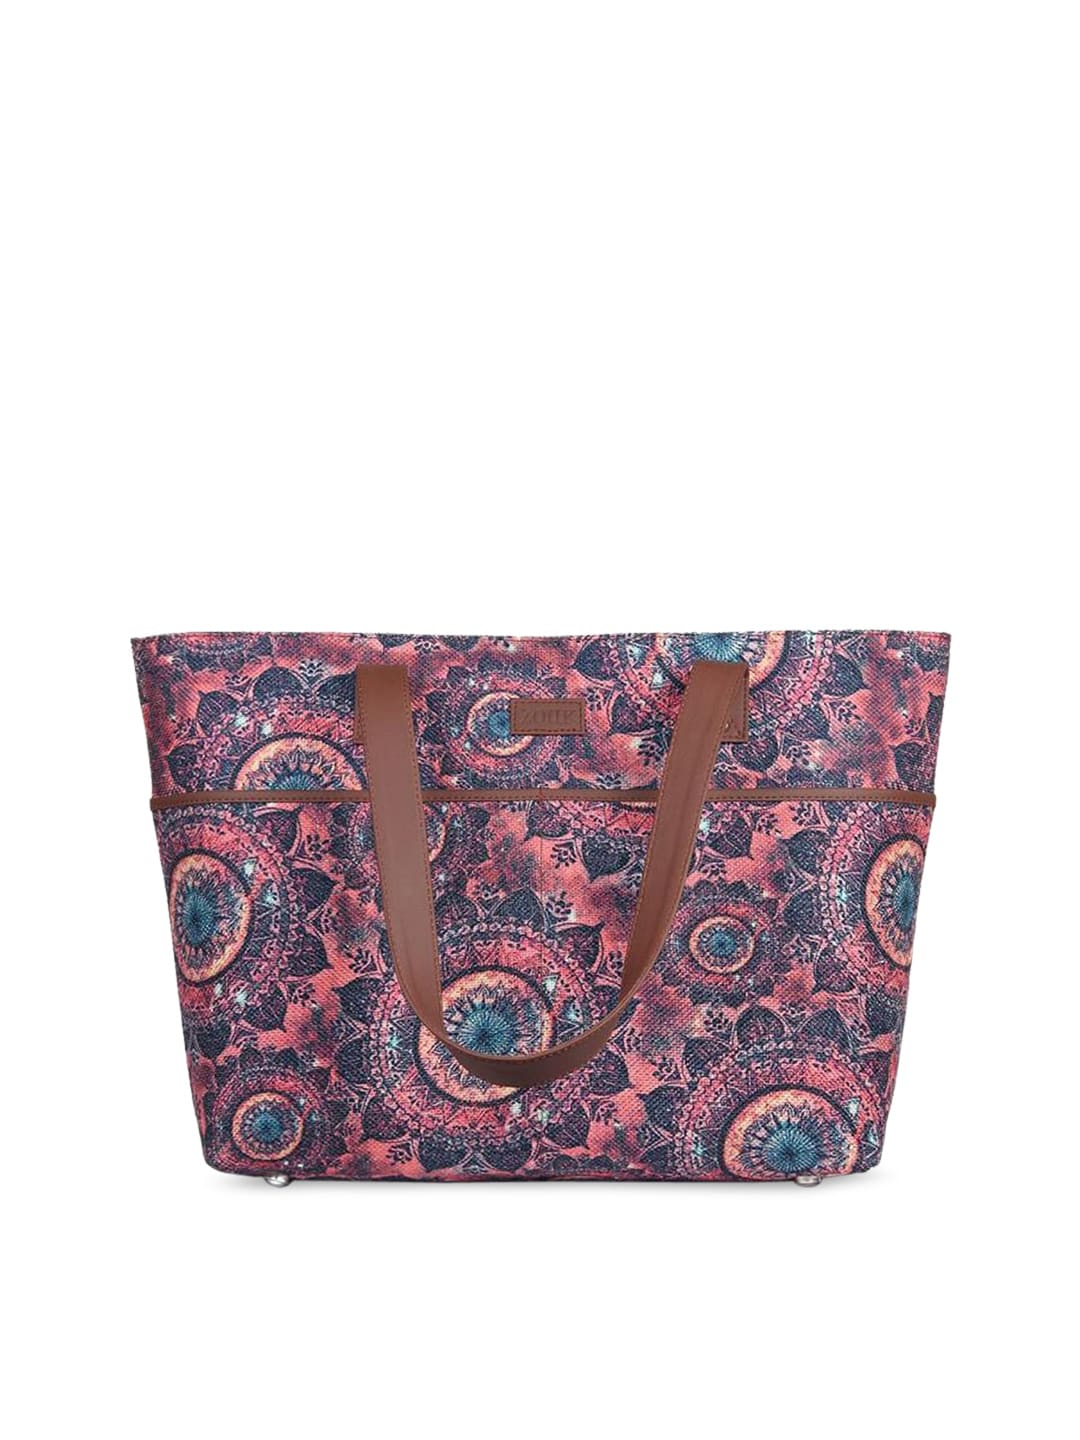 ZOUK Pink Ethnic Motifs Printed Shopper Tote Bag Price in India